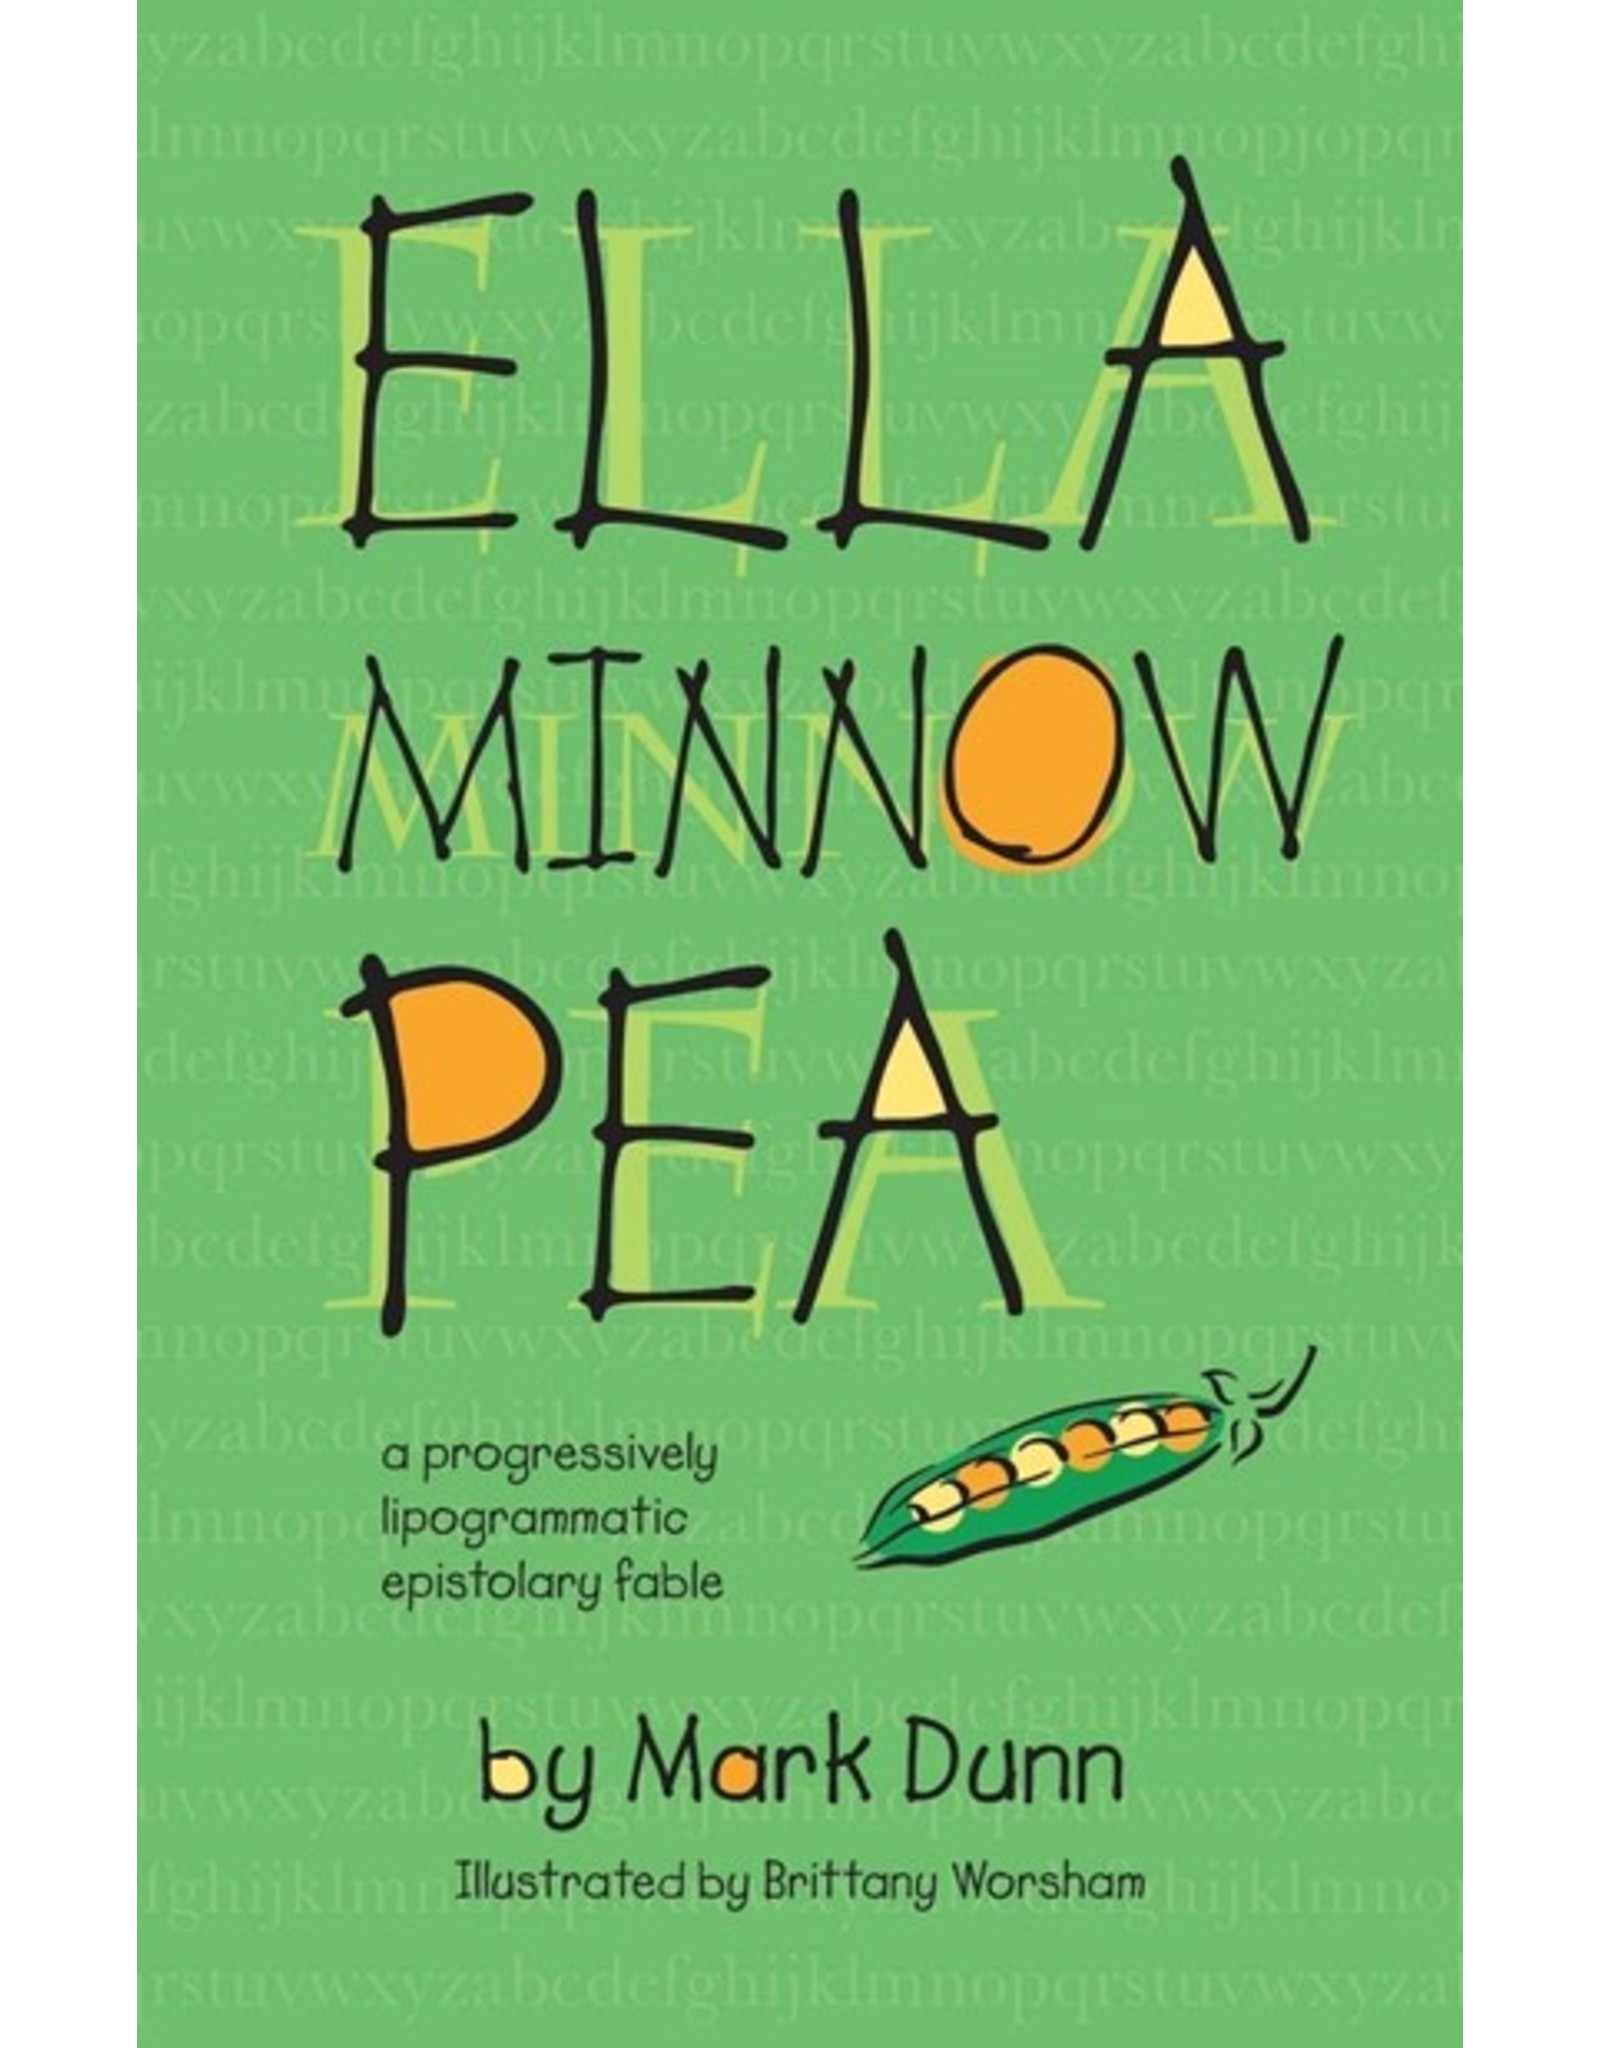 Books Ella Minnow Pea : a progressively lipogrammic epistolary fable by Mark Dunn